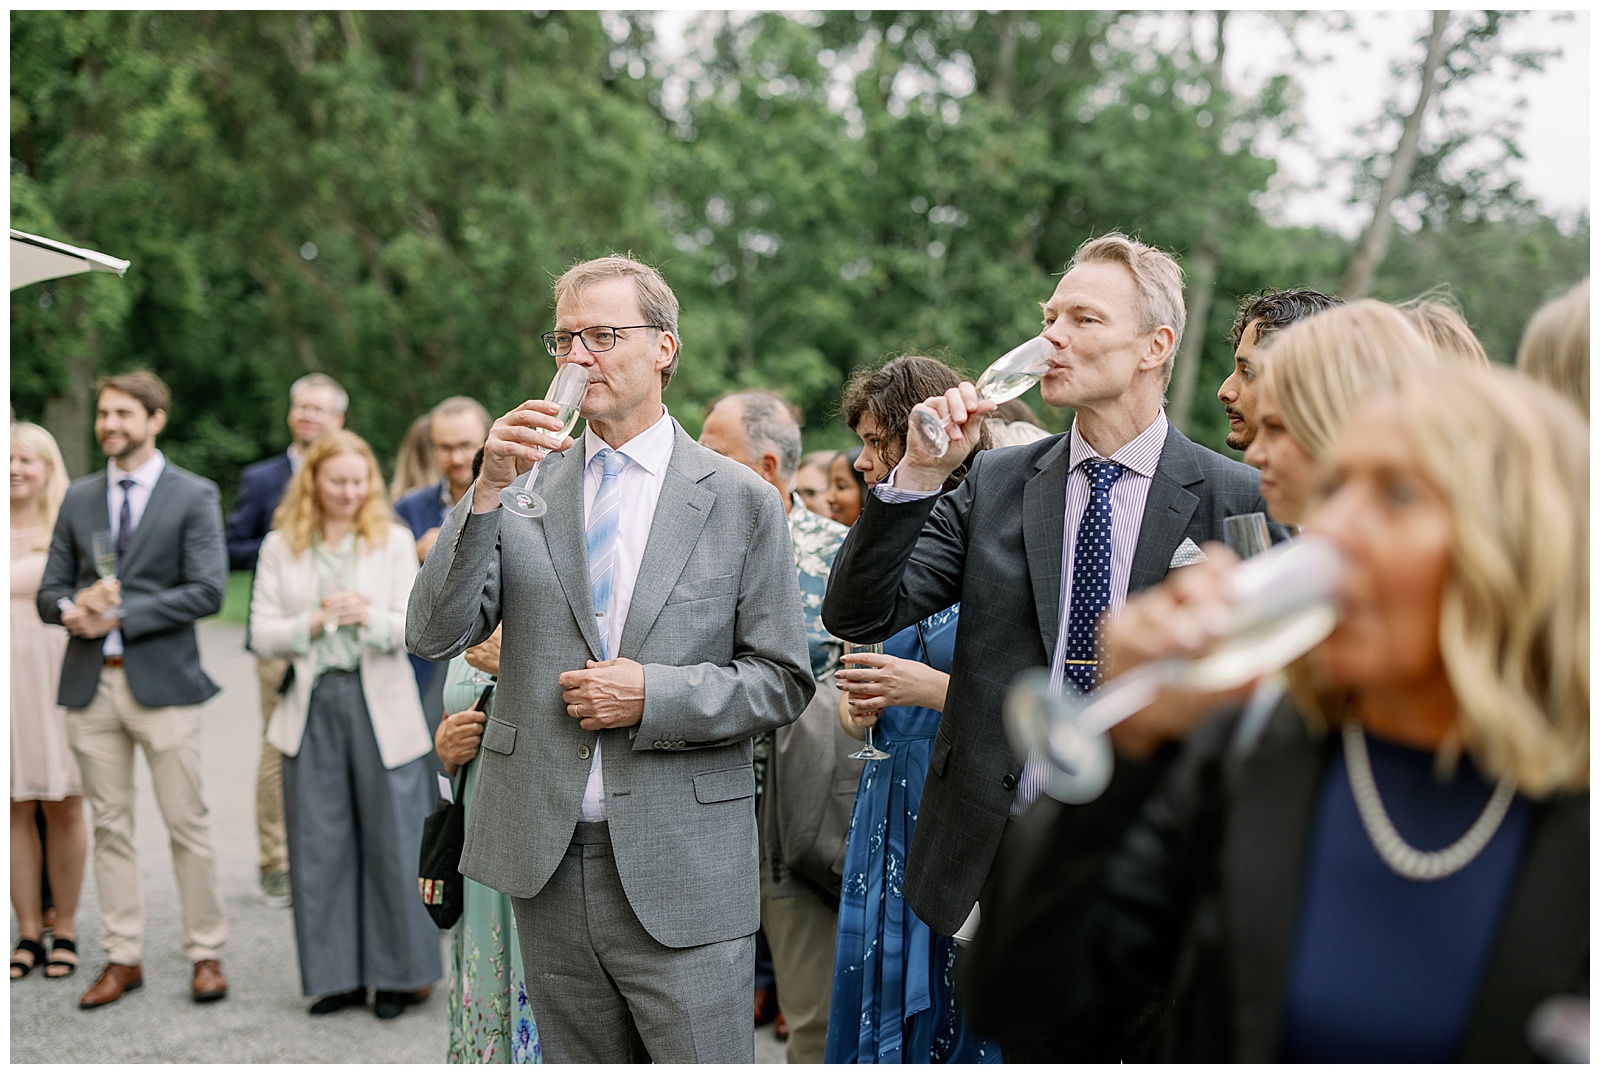 Mingel bröllop Tyresö slottskrog